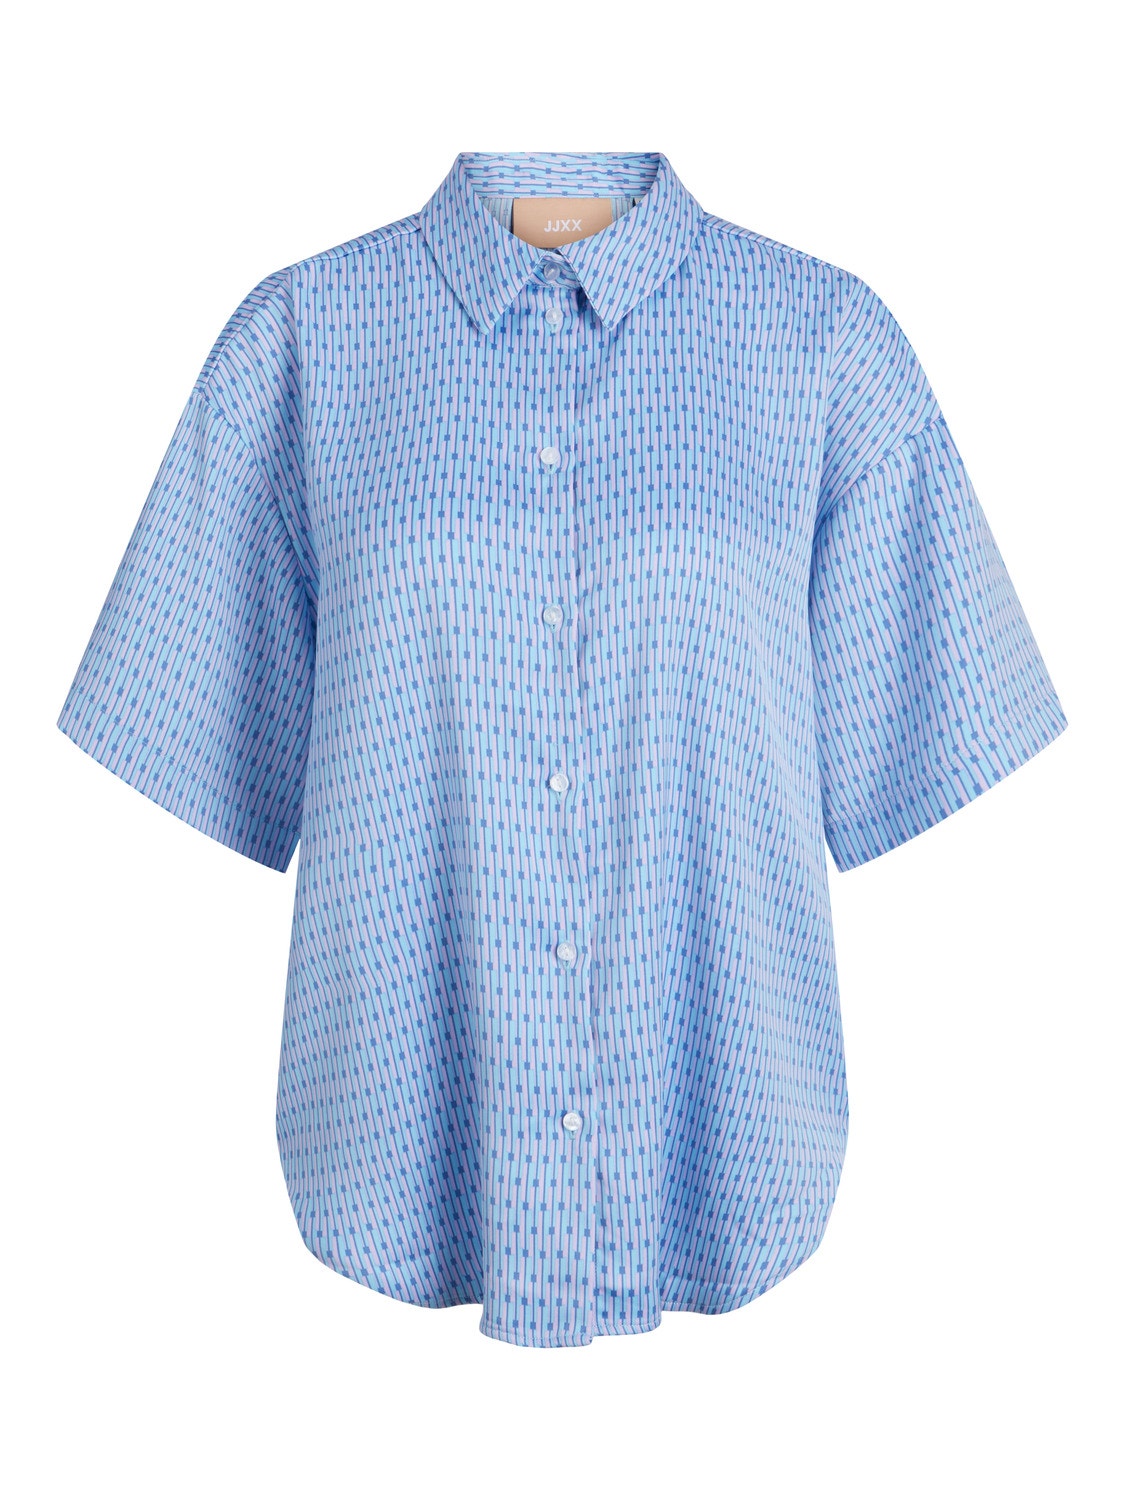 JJXX JXLINK Shirt -Silver Lake Blue - 12249579